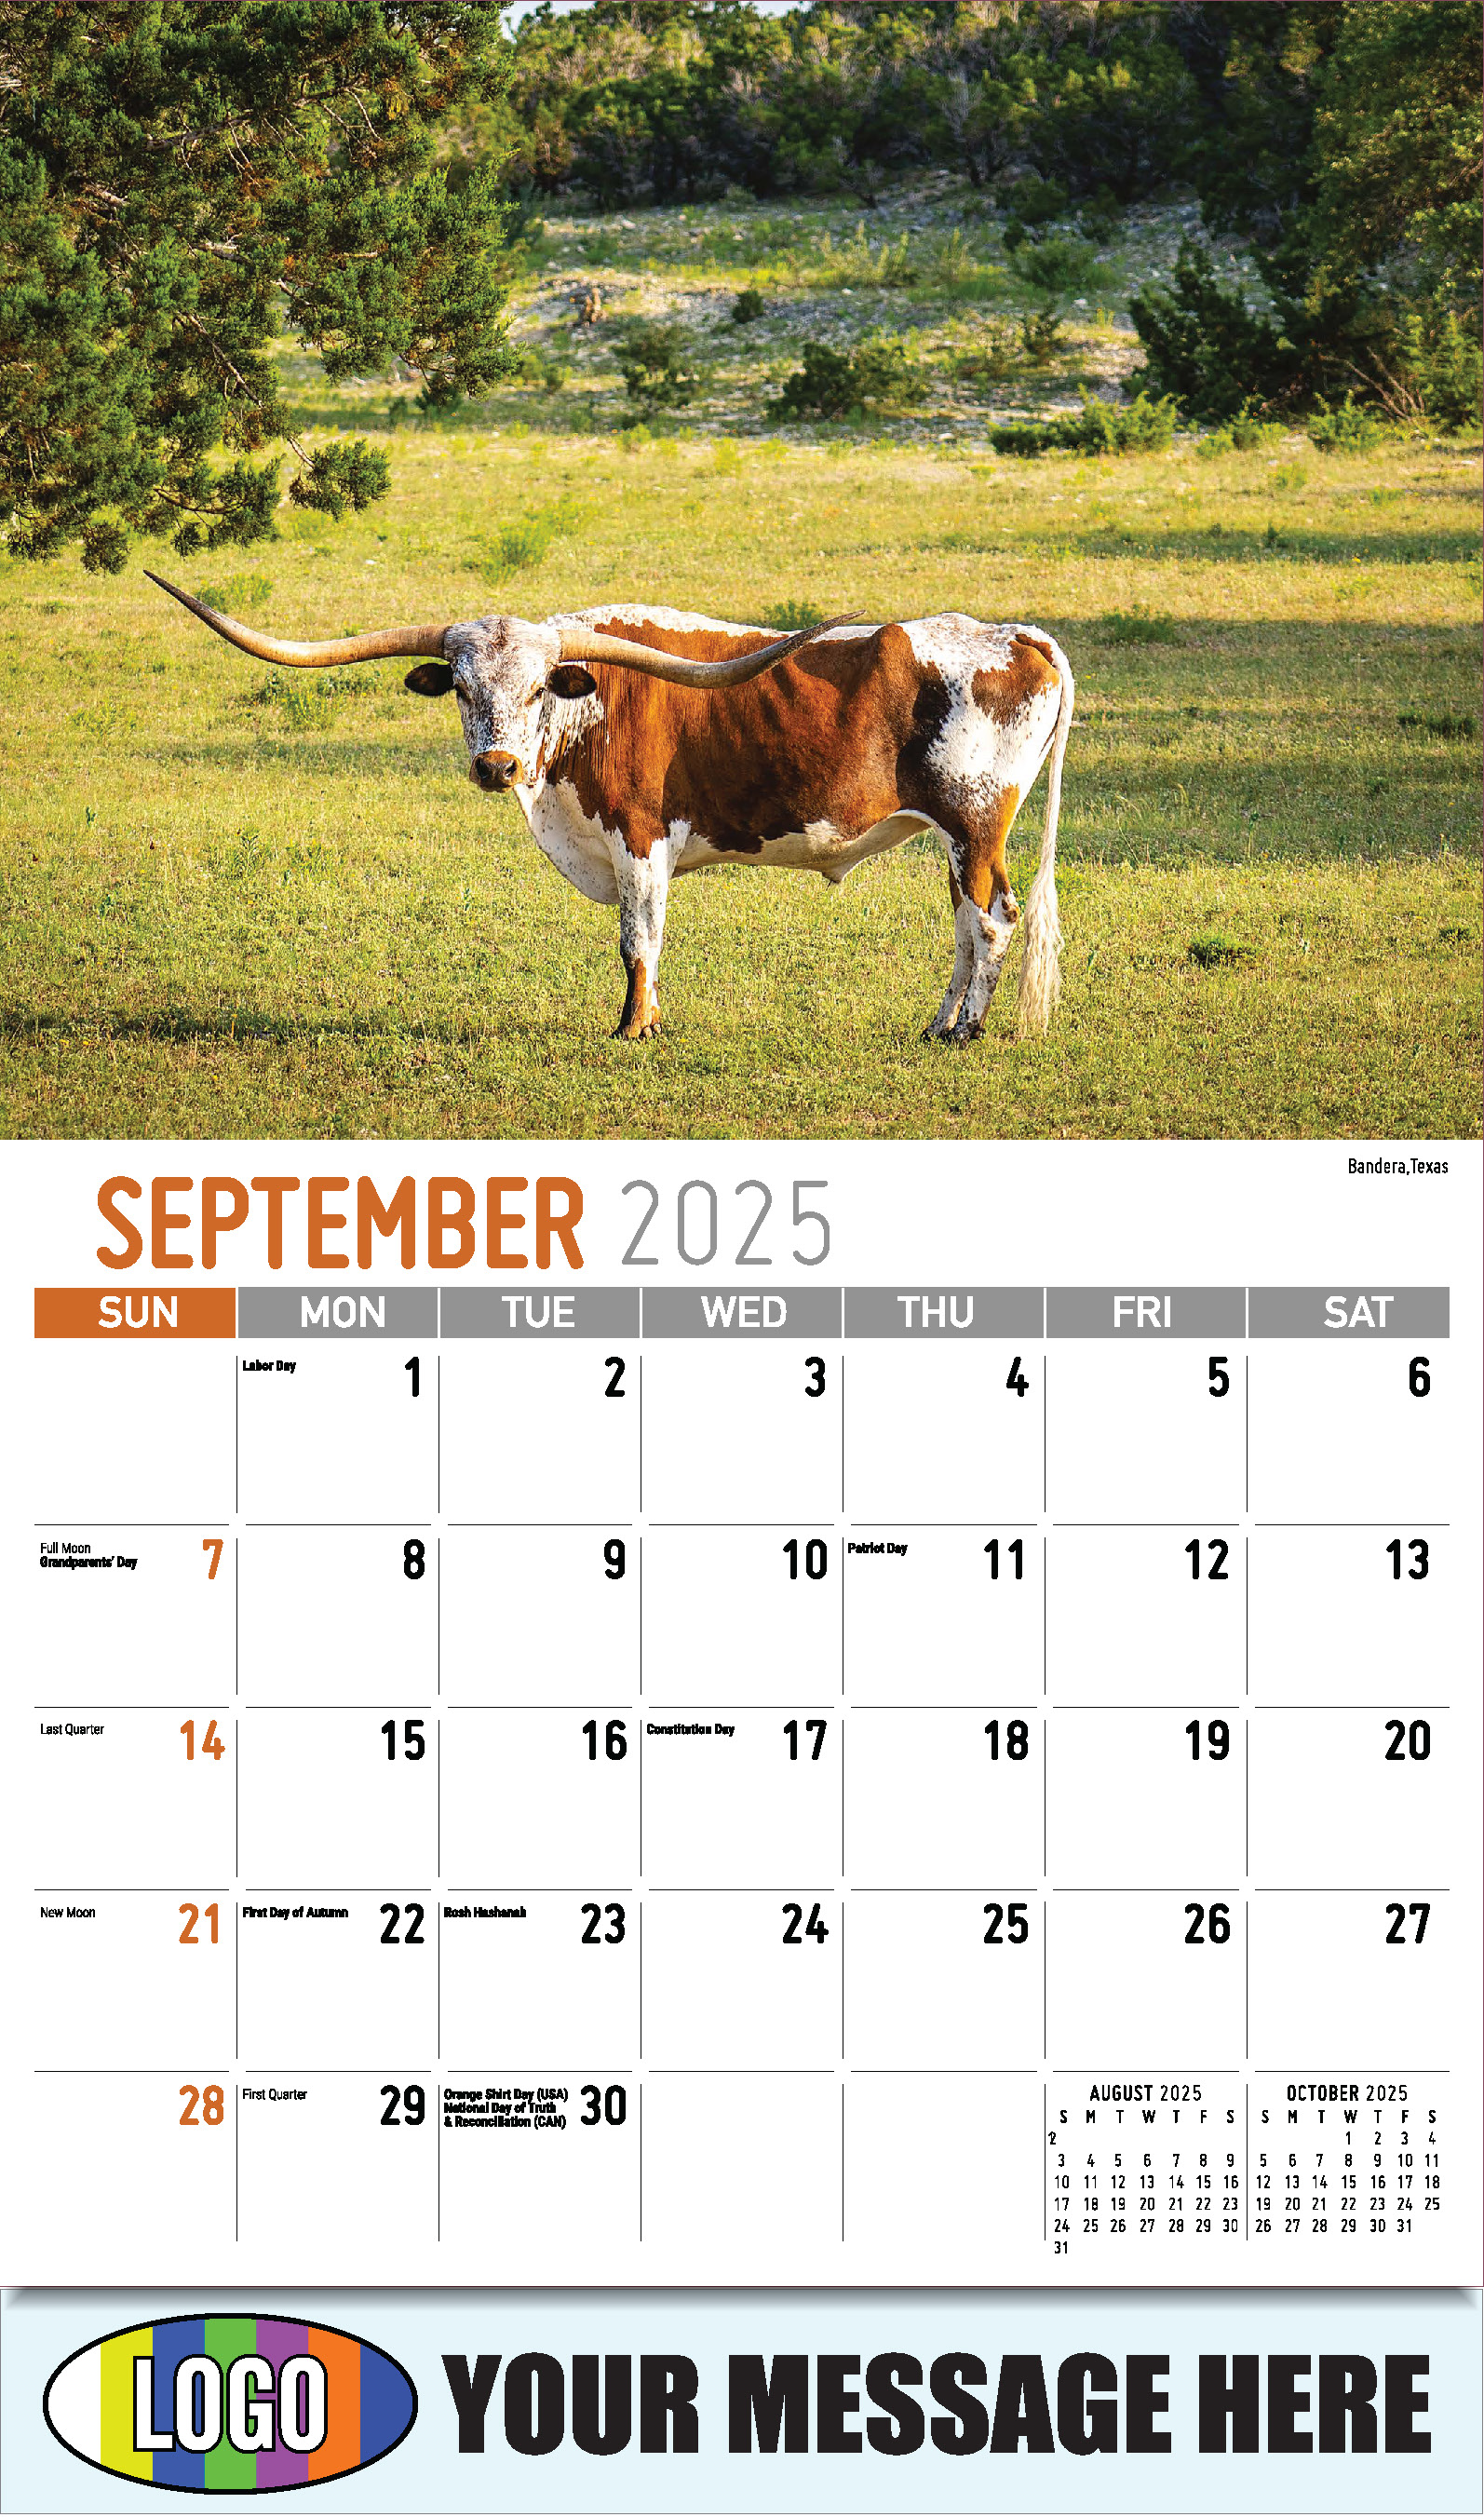 Scenes of Texas 2025 Business Advertising Calendar - September